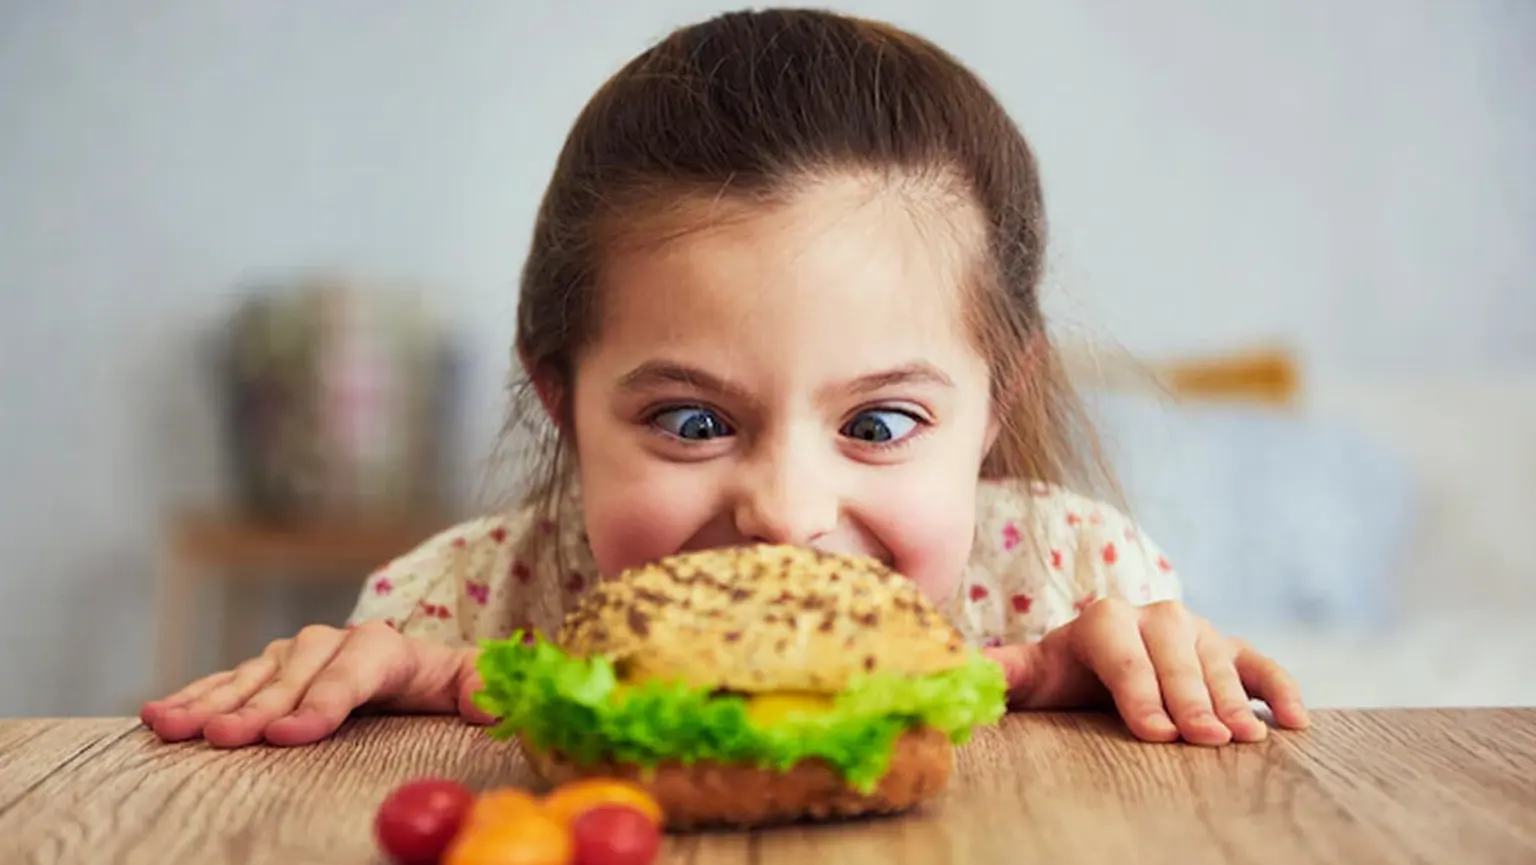 Know how to make children’s binge eating habits healthier